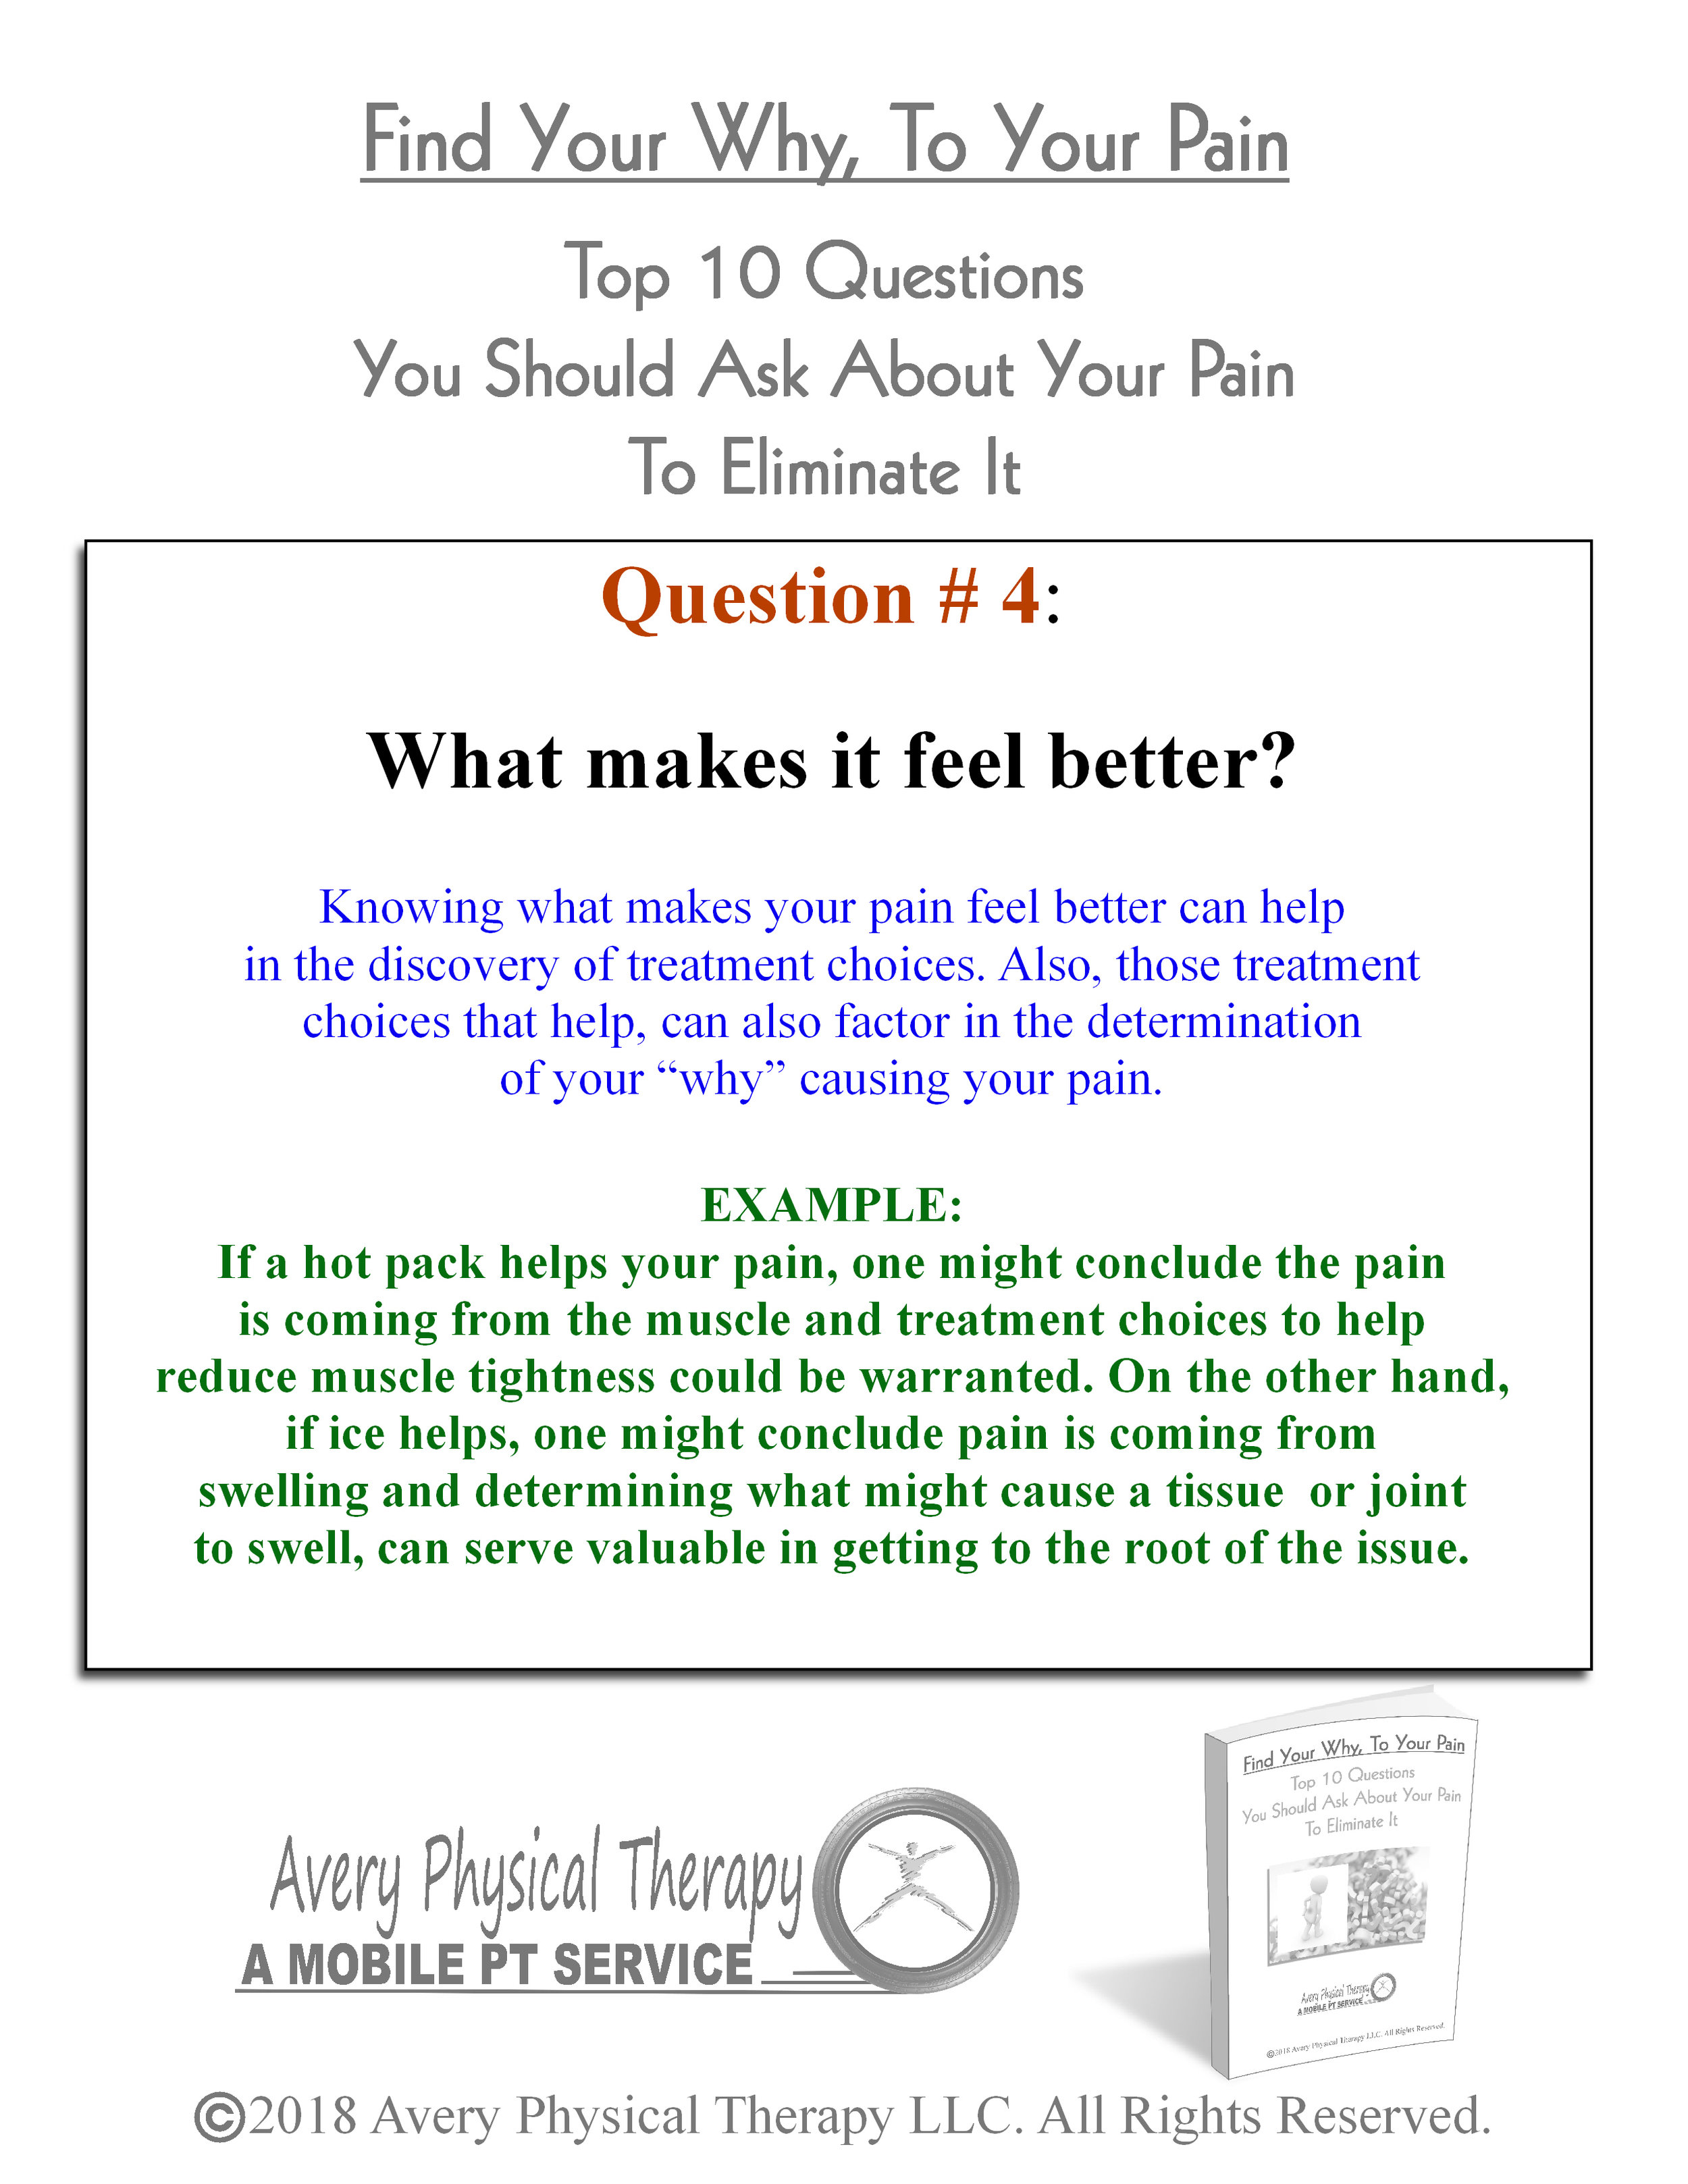 Top 10 Pain Questions 4-6E.JPG